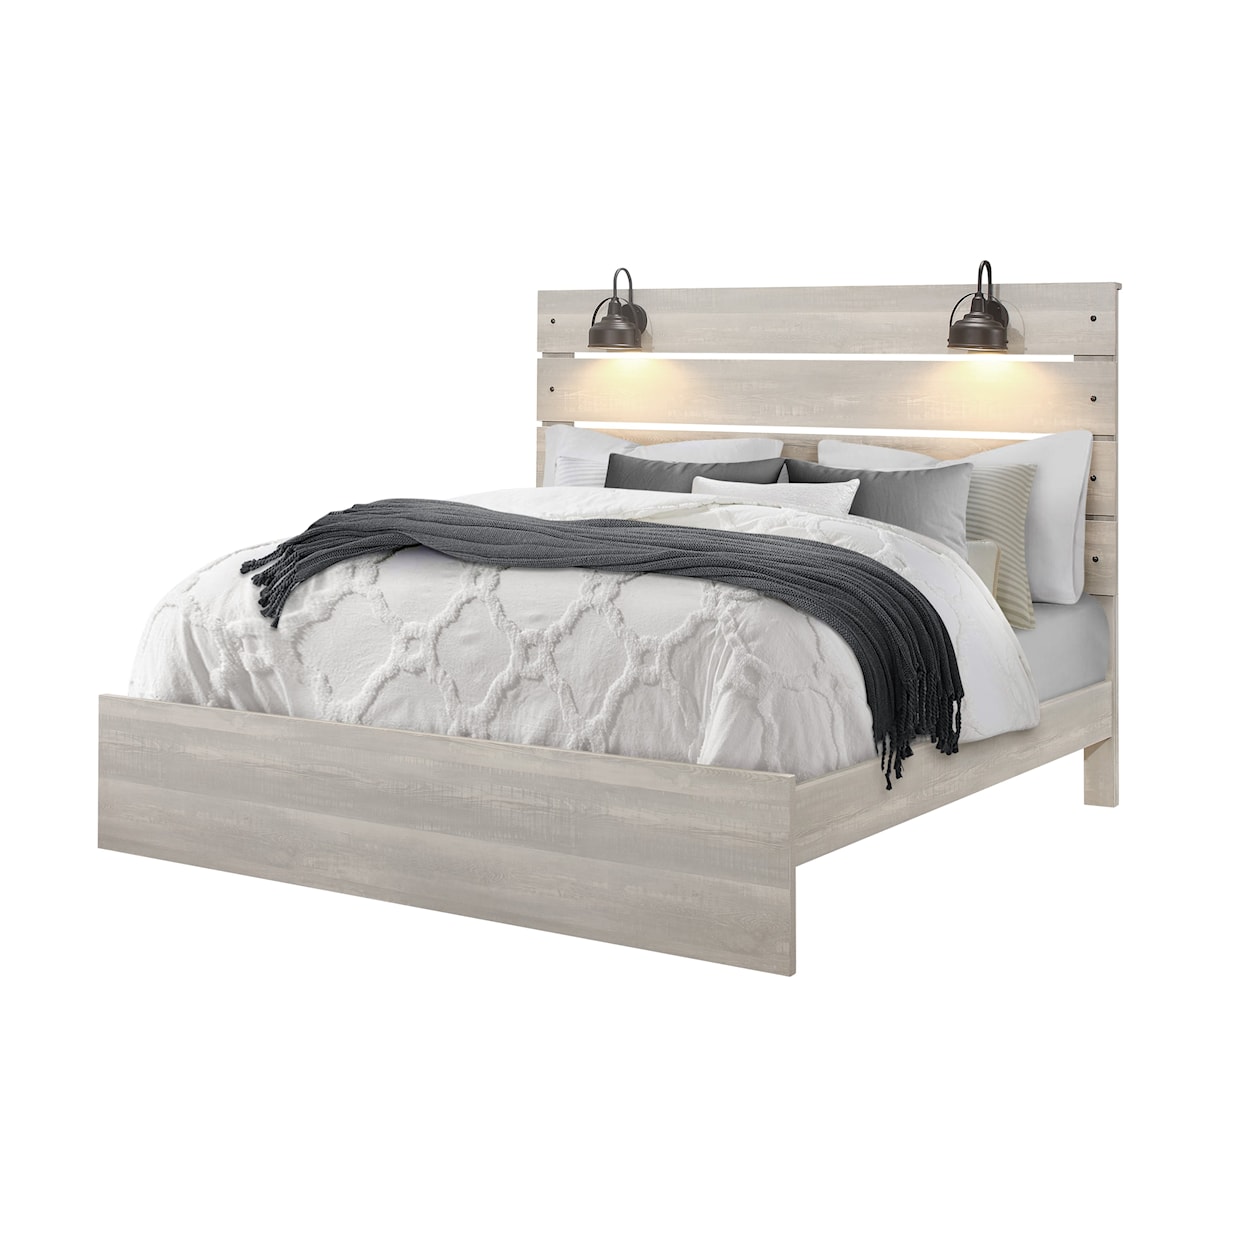 Global Furniture LINWOOD White King Bed